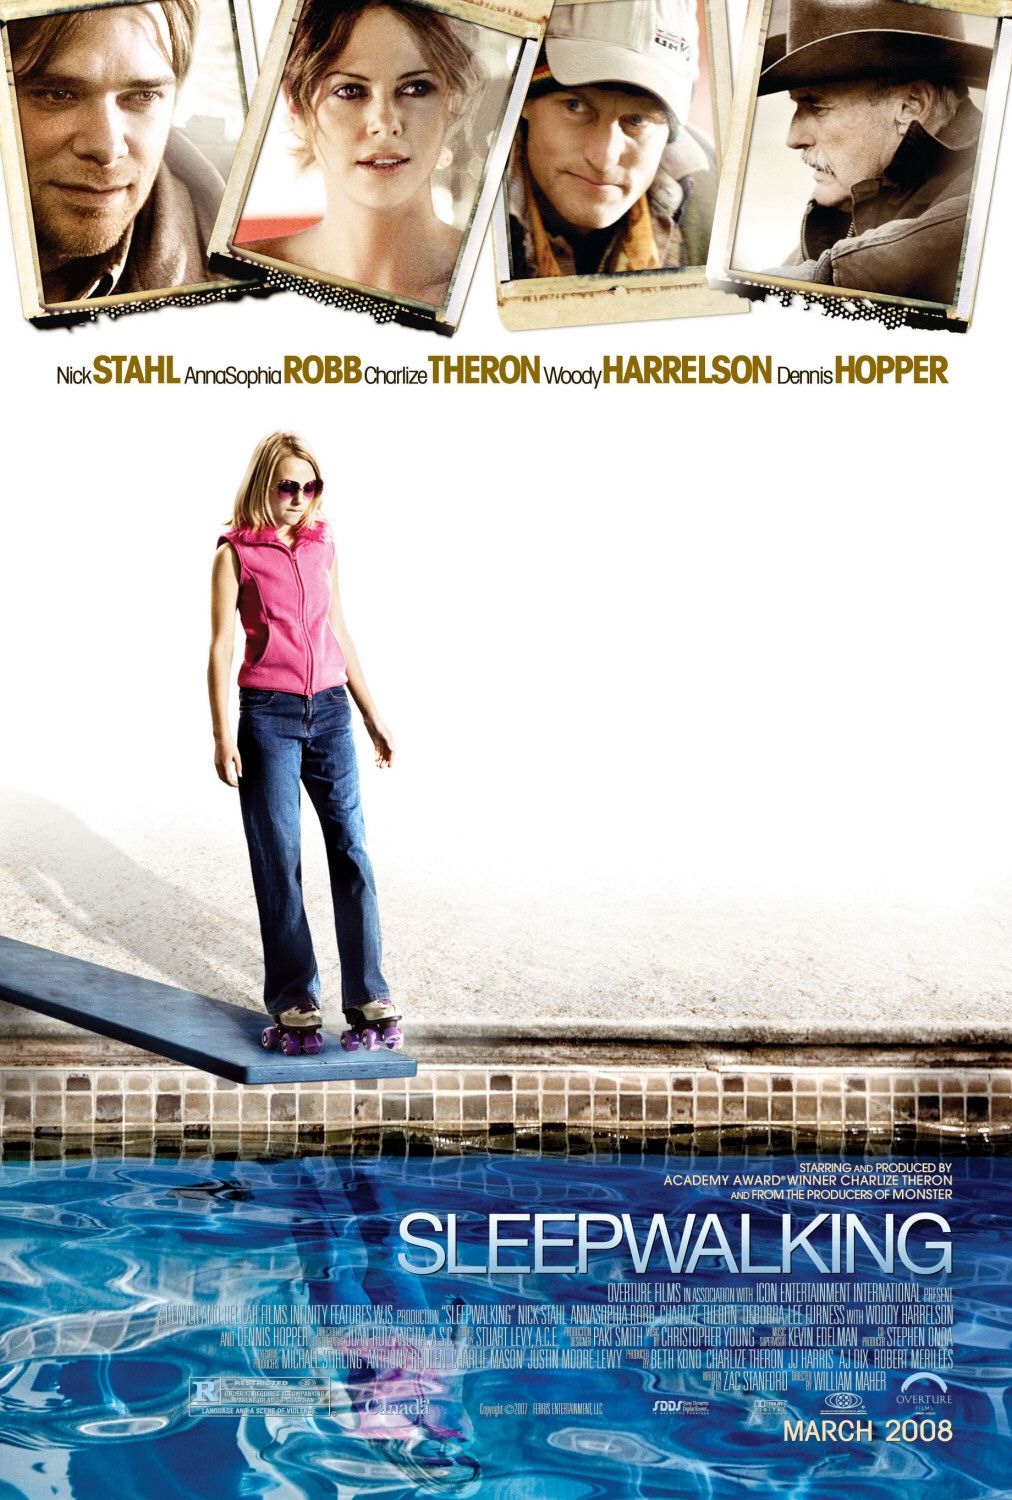 Extra Large Movie Poster Image for Sleepwalking 